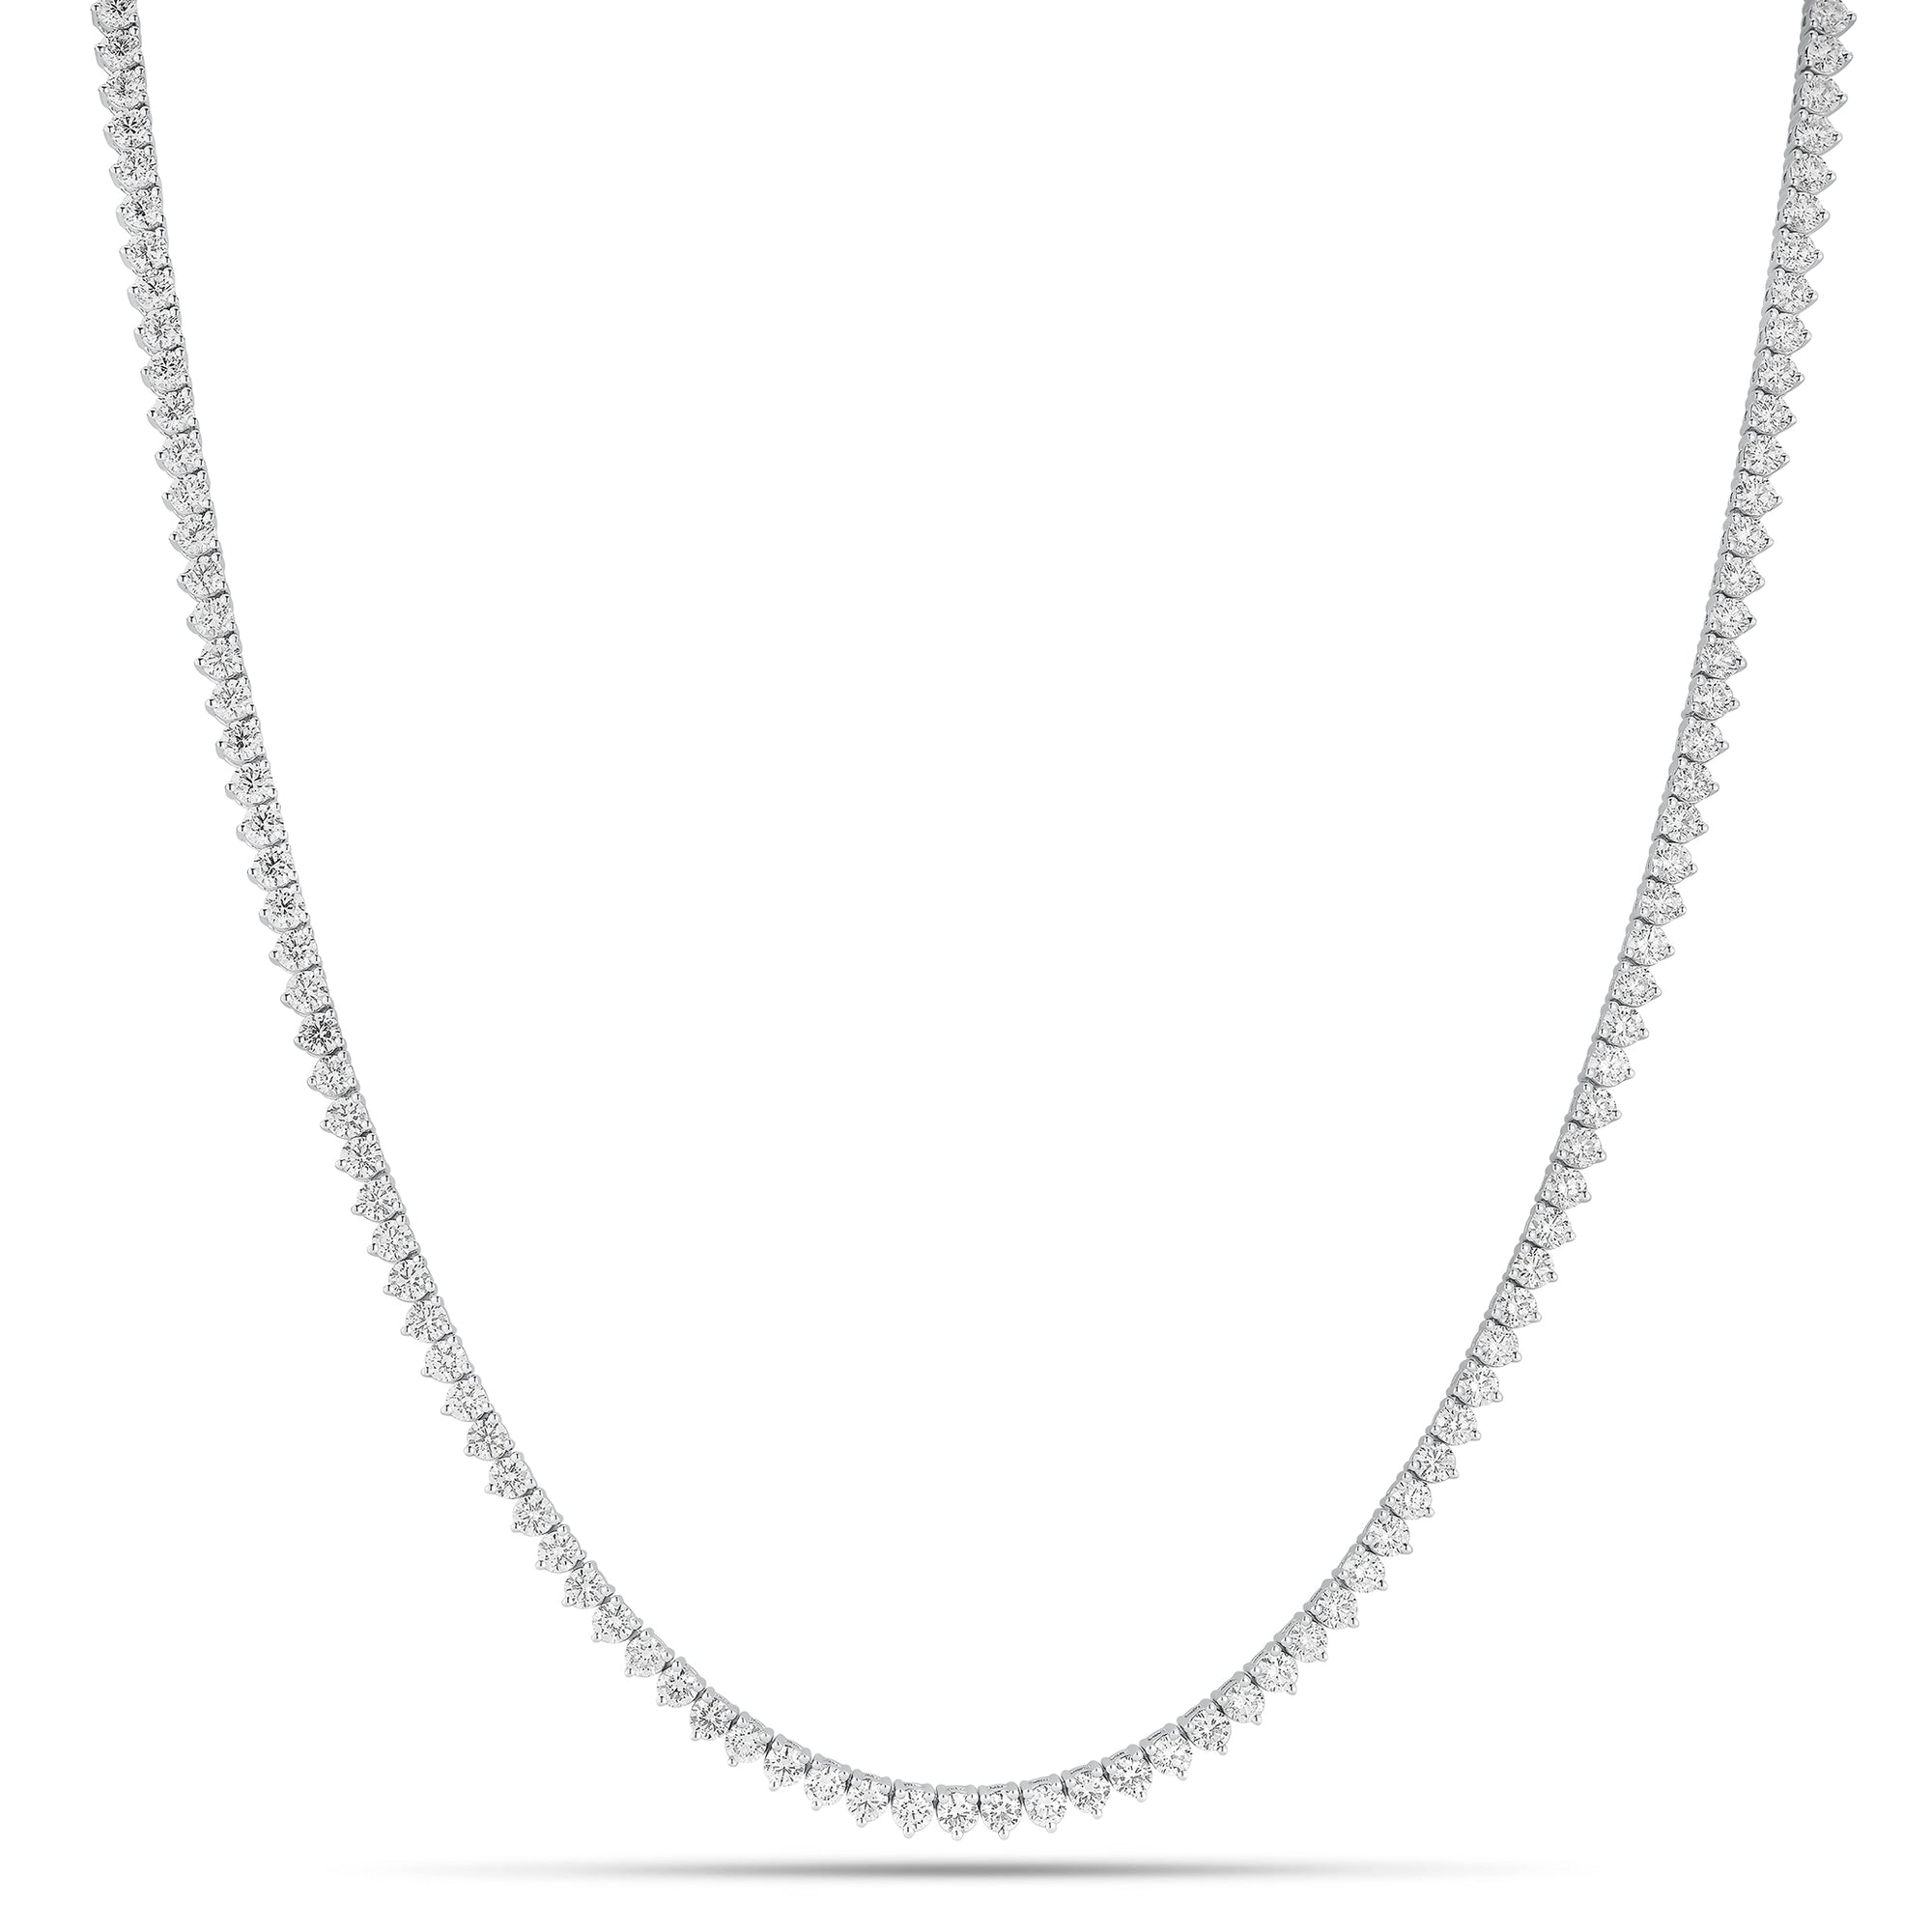 19.94 ct Diamond Long Tennis Necklace - 18K gold weighing 36.64 grams  - 239 round diamonds weighing 19.94 carats  - 28” length